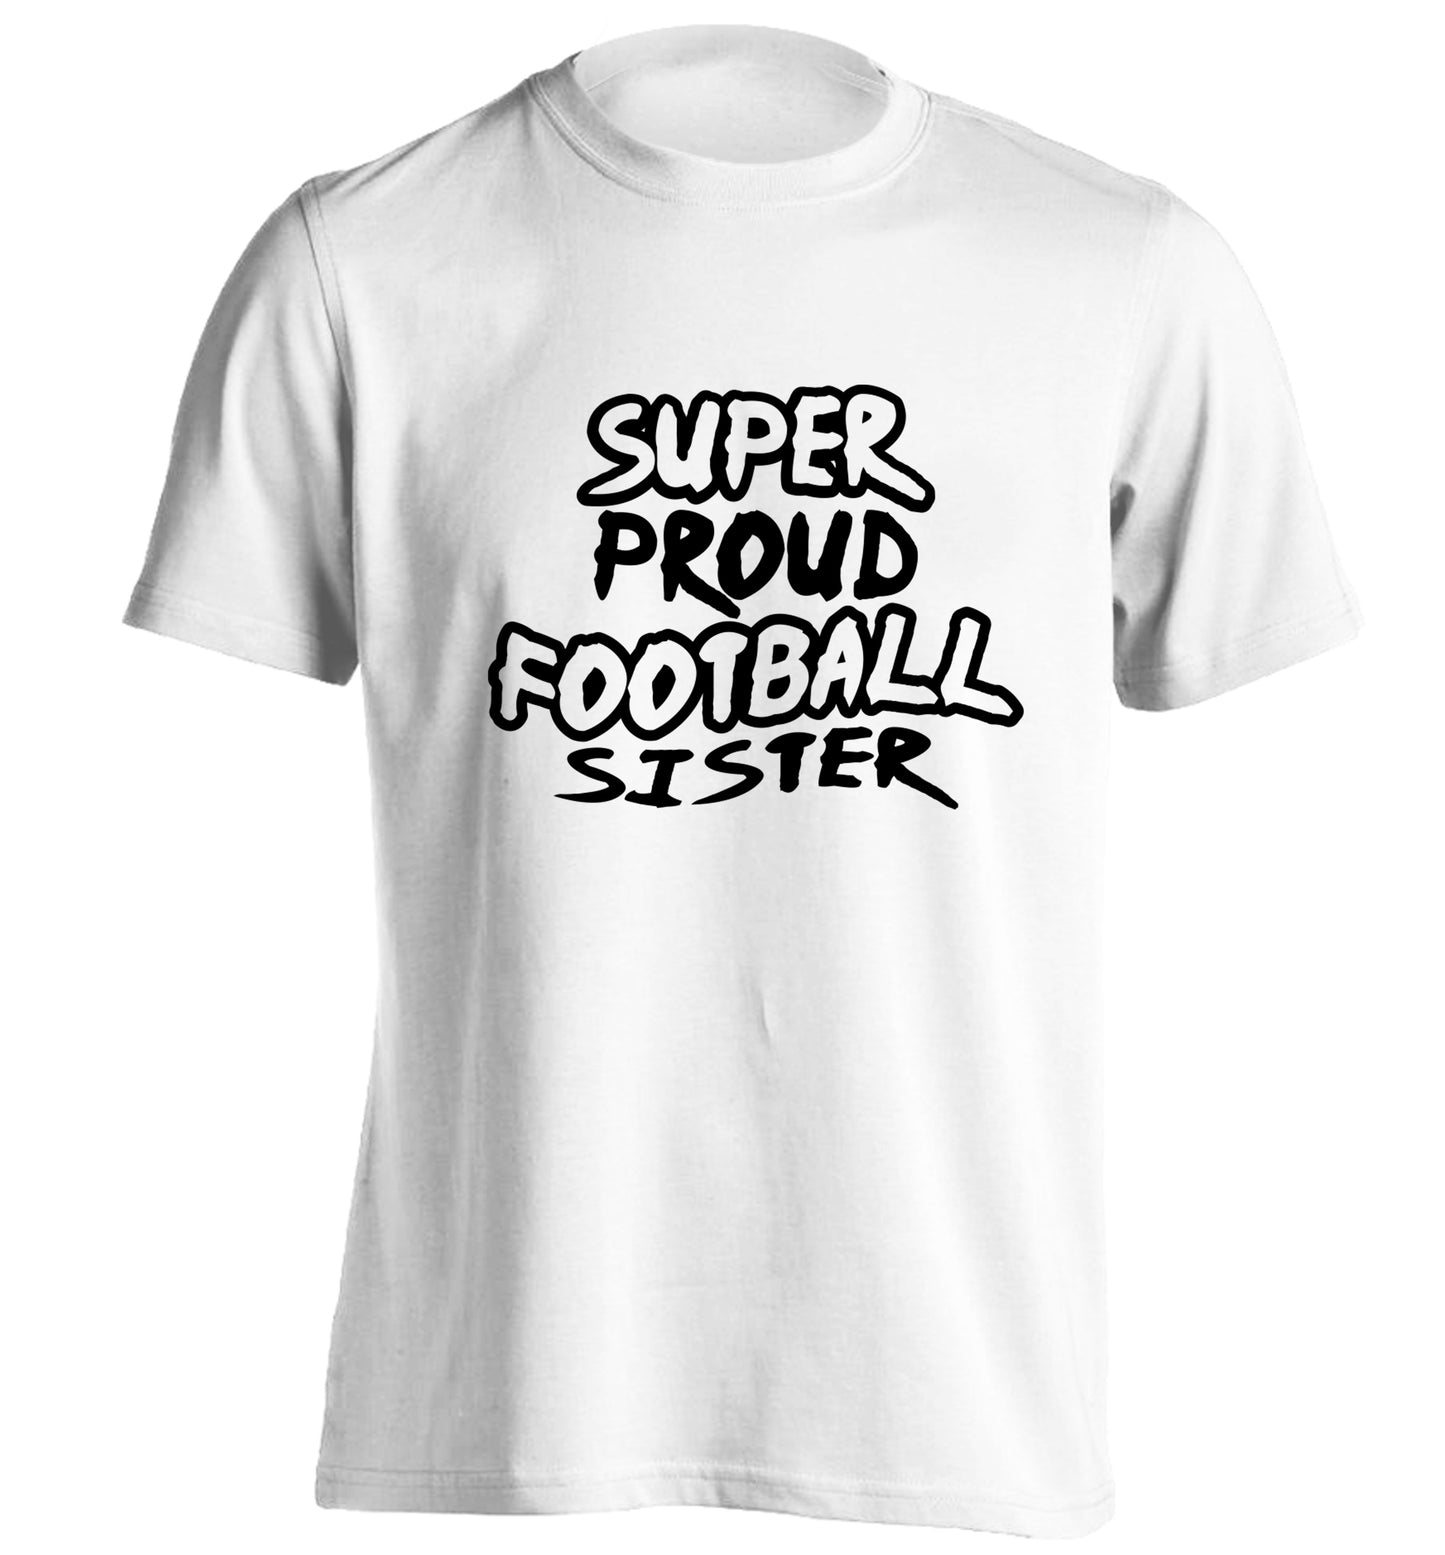 Super proud football sister adults unisexwhite Tshirt 2XL